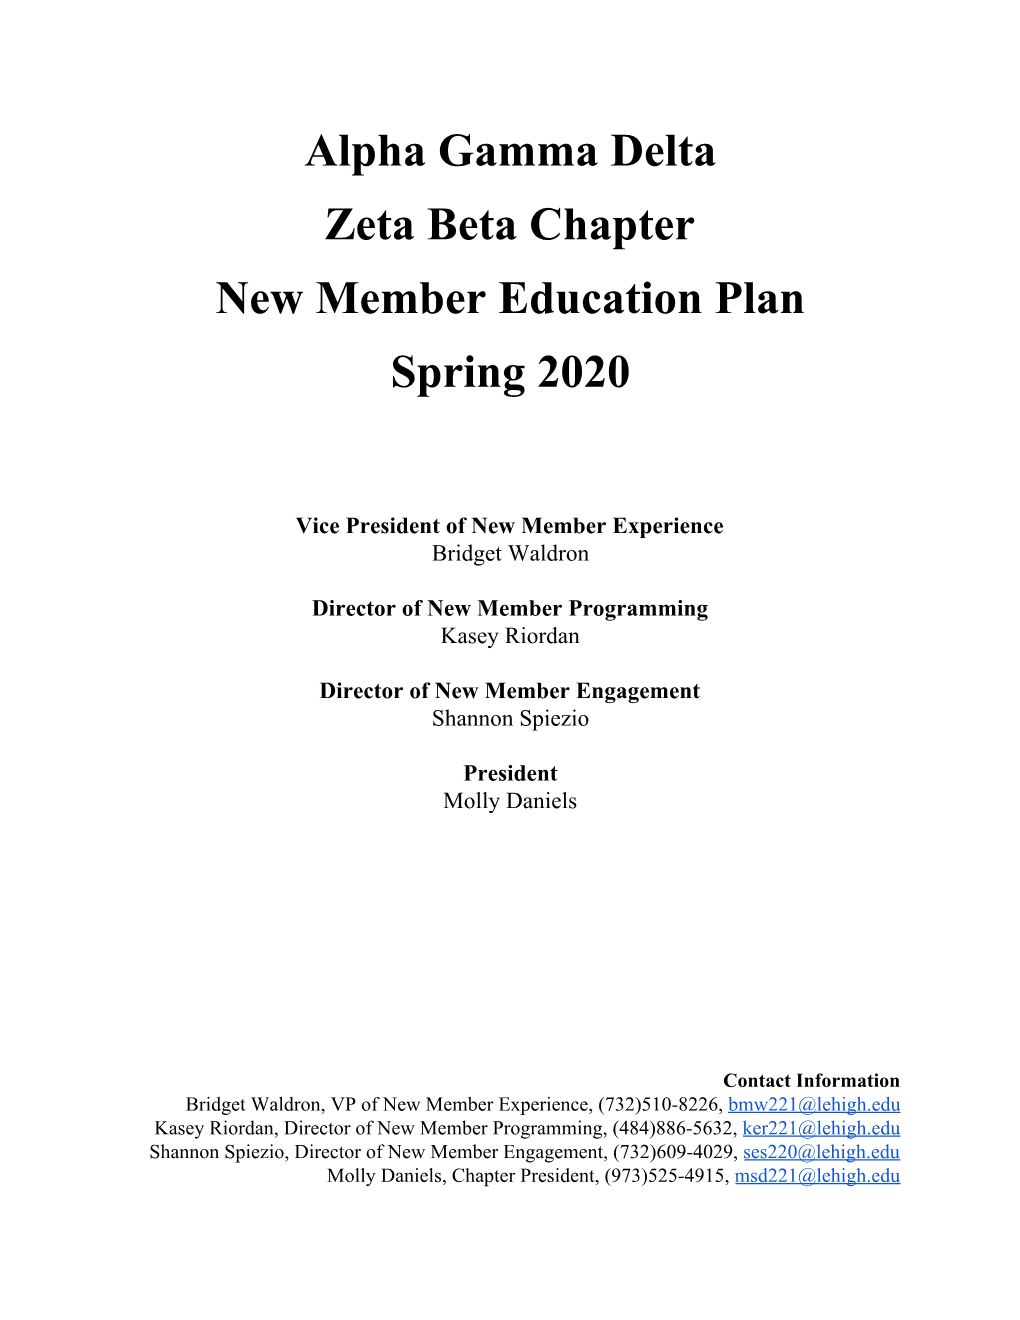 Alpha Gamma Delta Zeta Beta Chapter New Member Education Plan Spring 2020